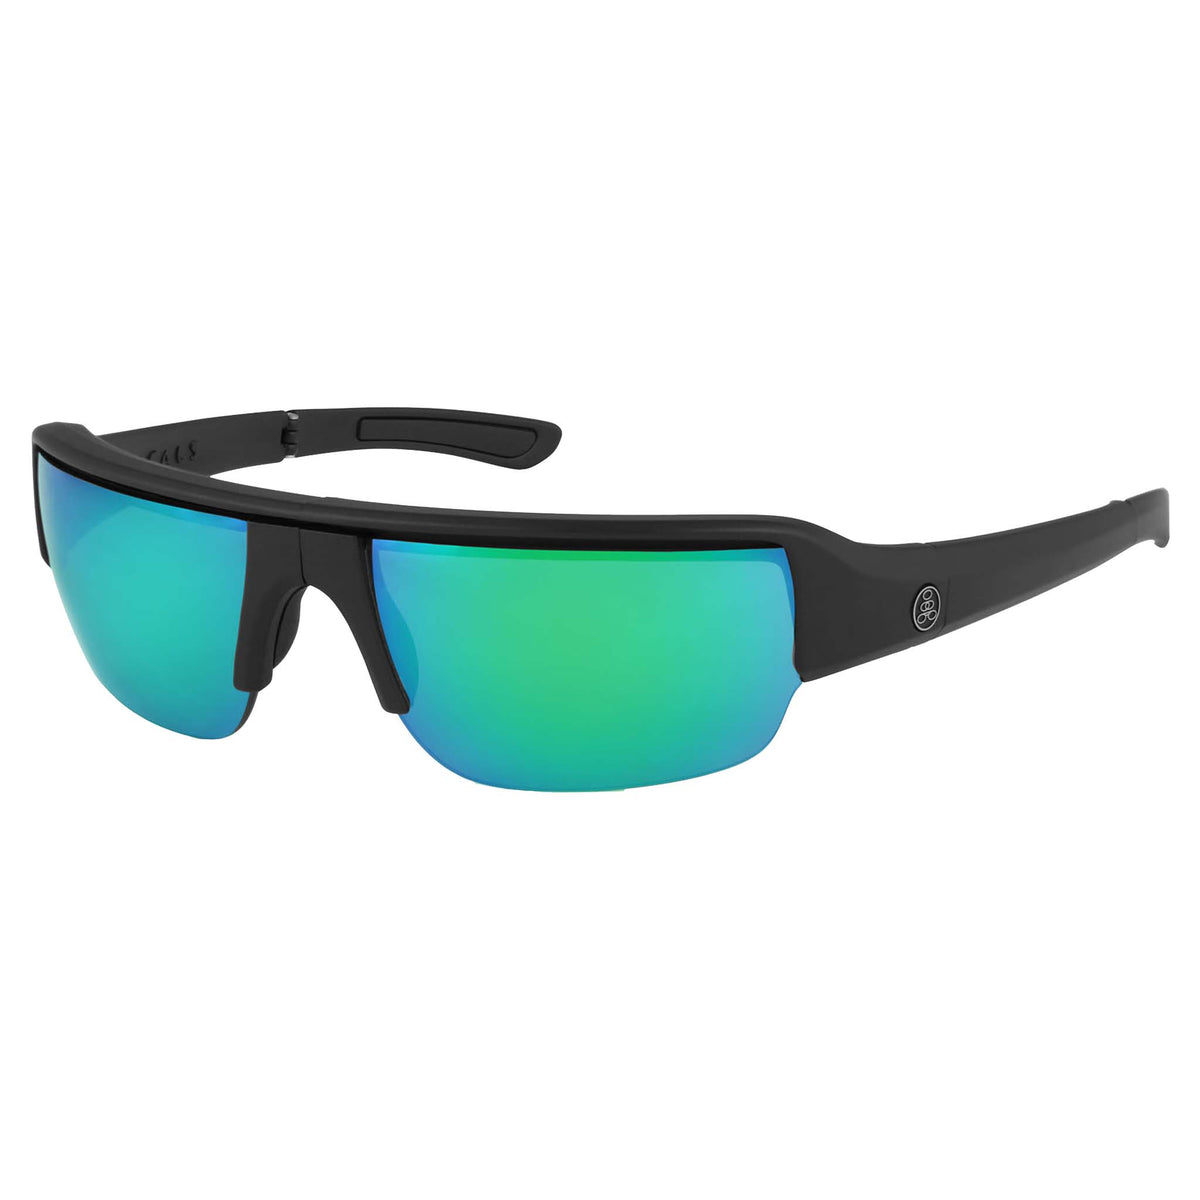 Popticals, Premium Compact Sunglasses, PopGun, 010010-BMEN, Polarized Sunglasses, Matte Black Frame, Gray Lenses w/Green Mirror, Glam View